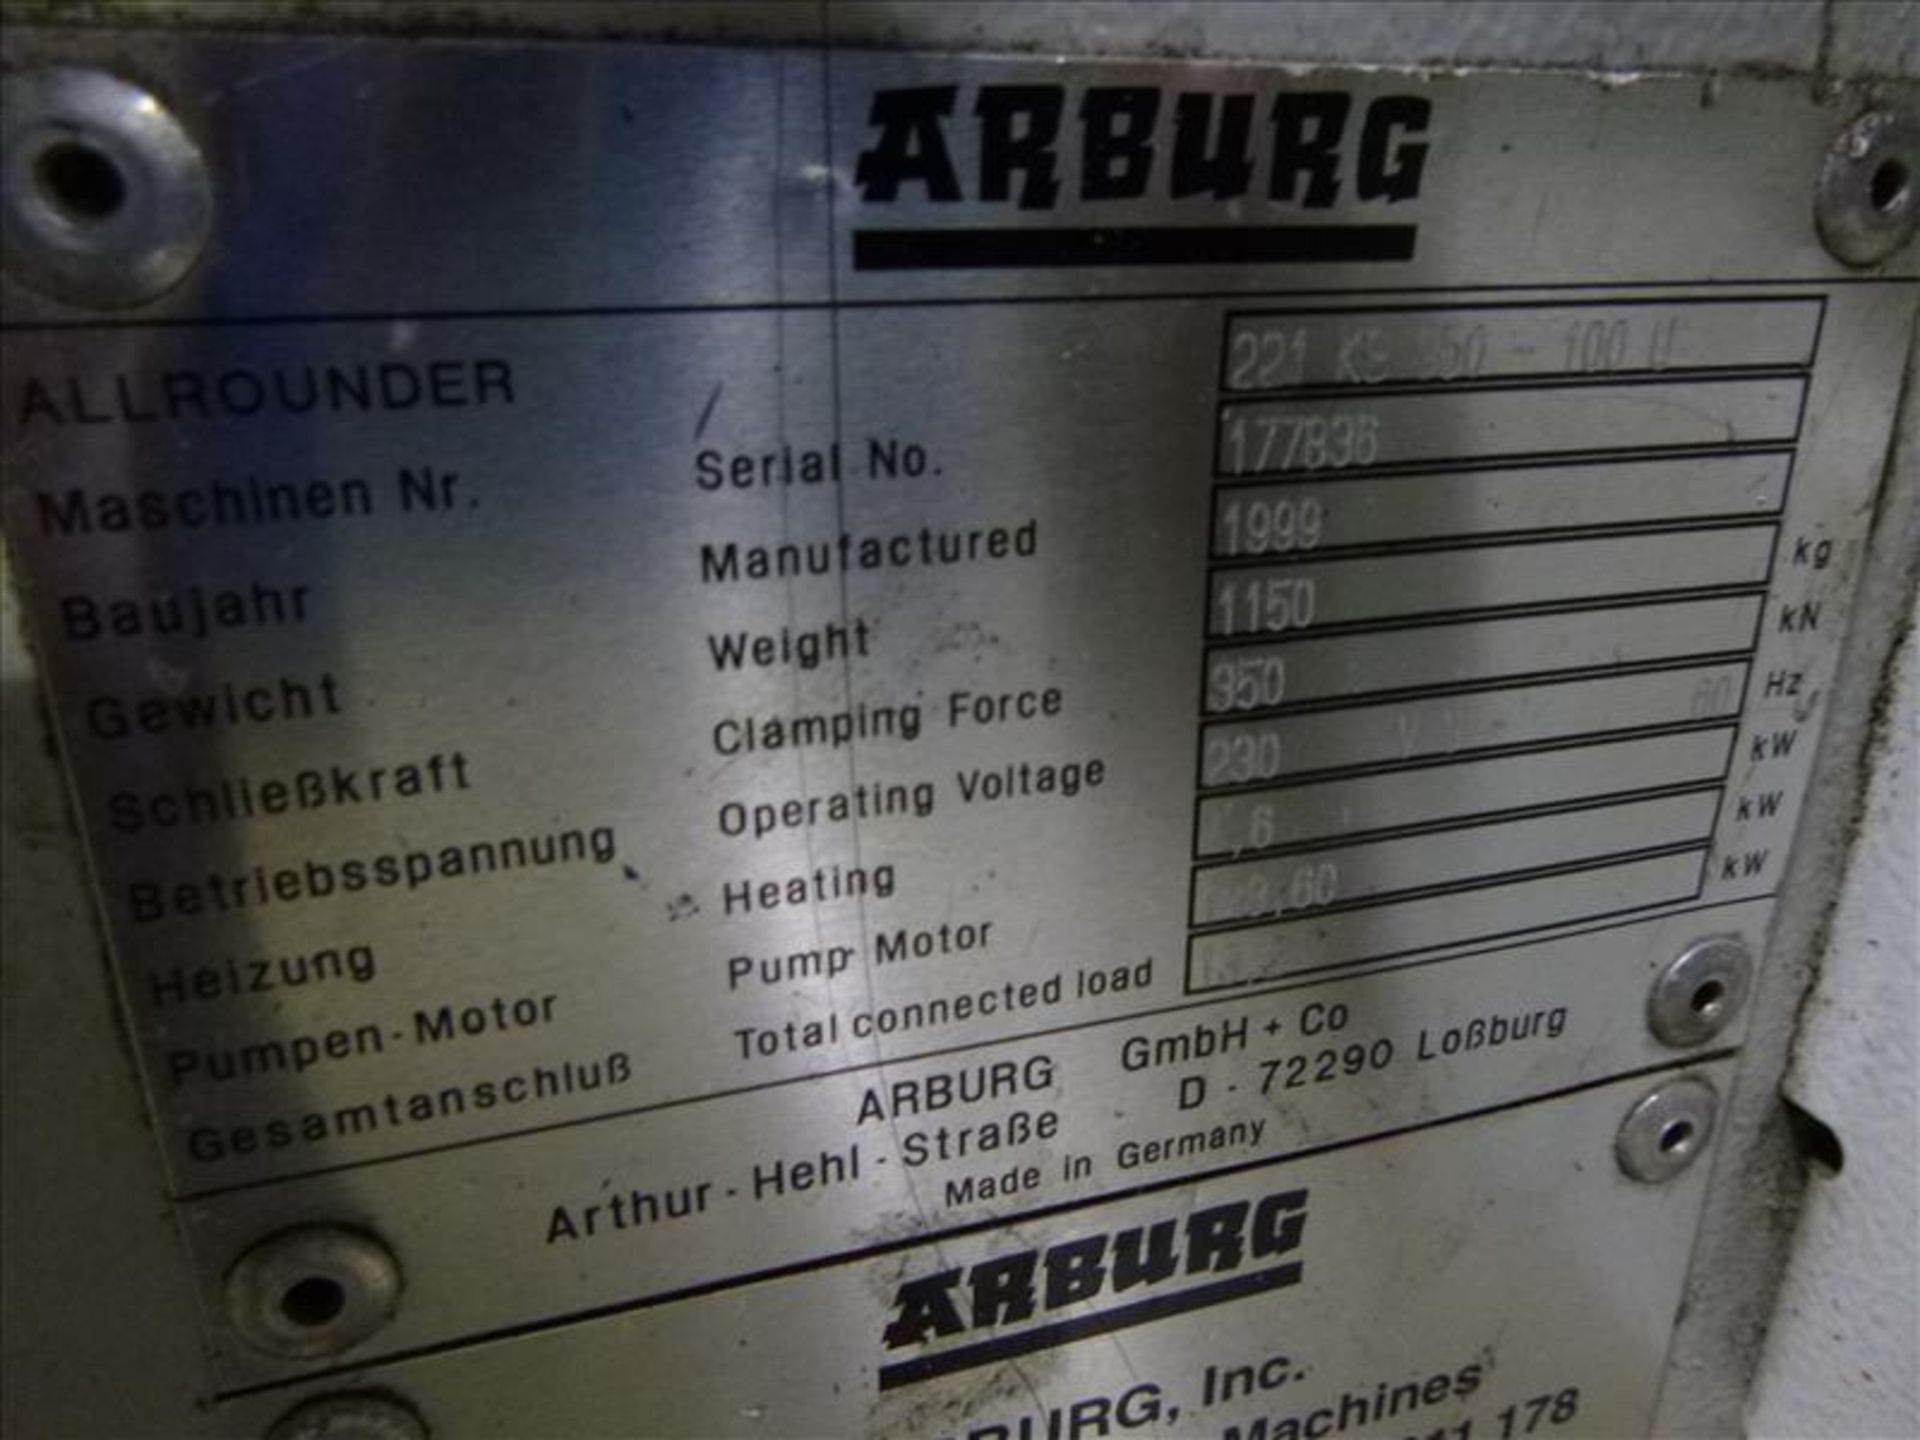 Arburg mod. Allrounder 221.KS 350-100U Vertical Injection Molding Machine ser. no. 177836 (1999) w/ - Image 4 of 6